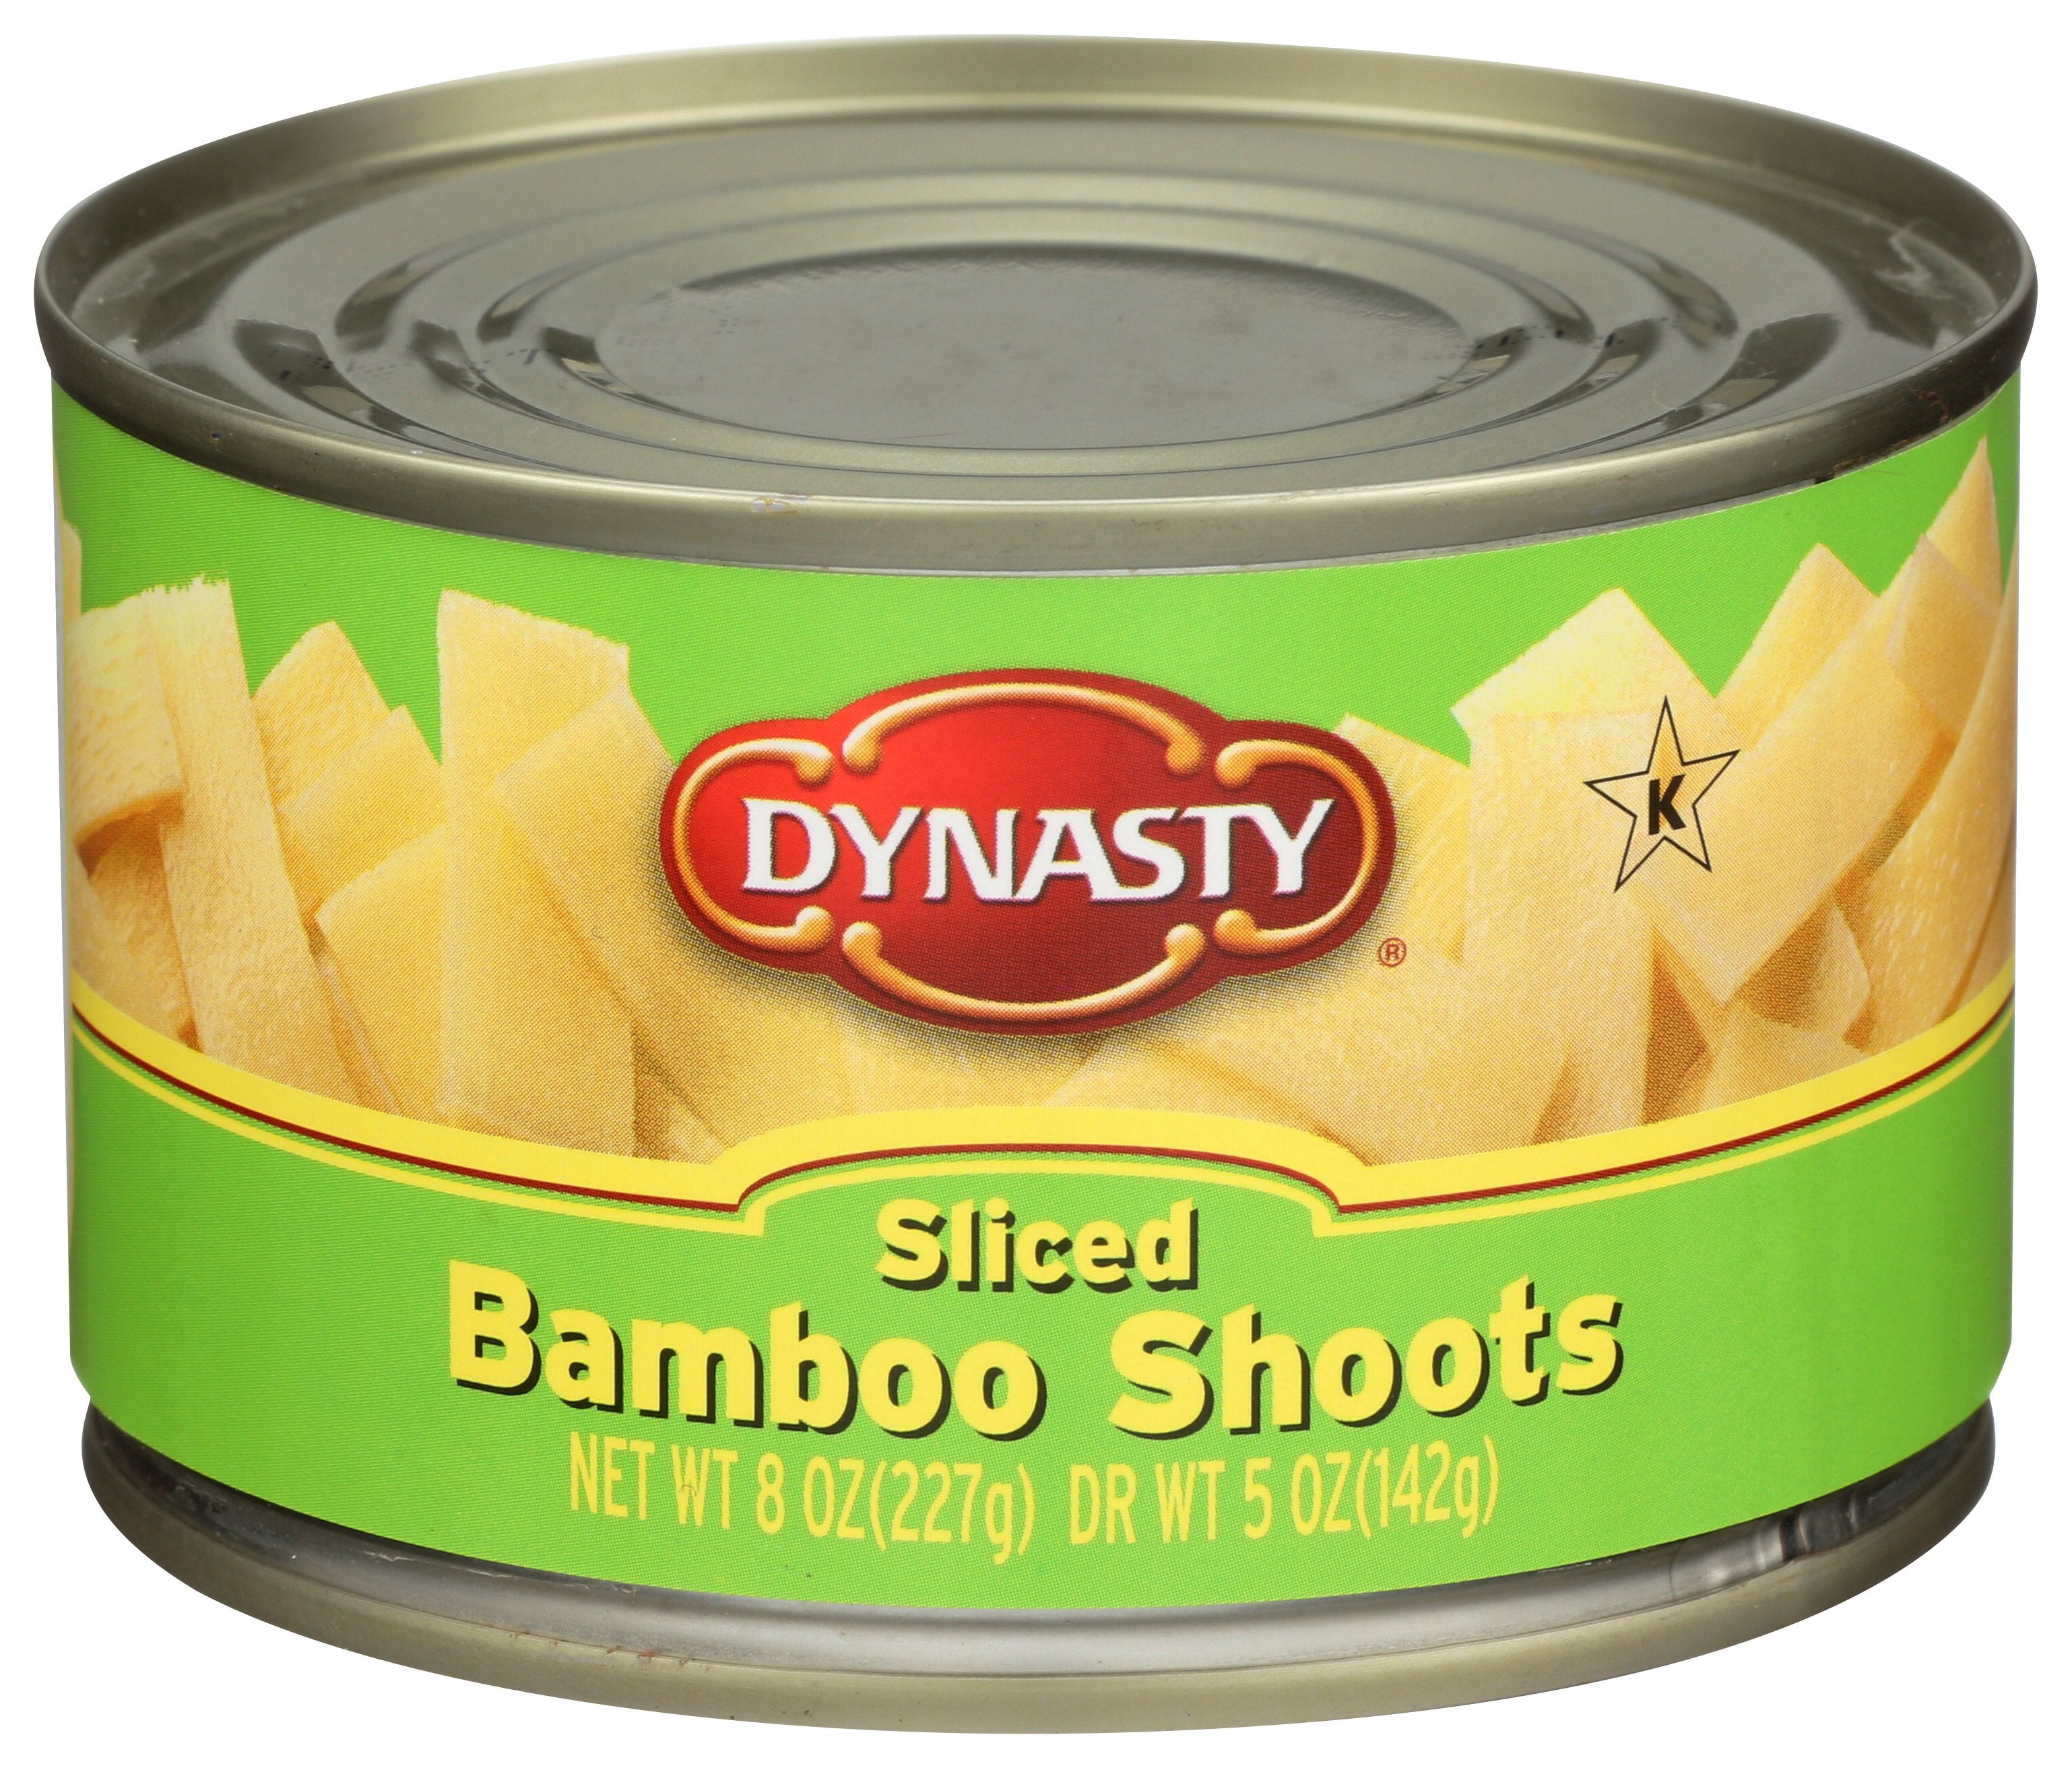 DYNASTY BAMBOO SHOOT SLICED - Case of 12